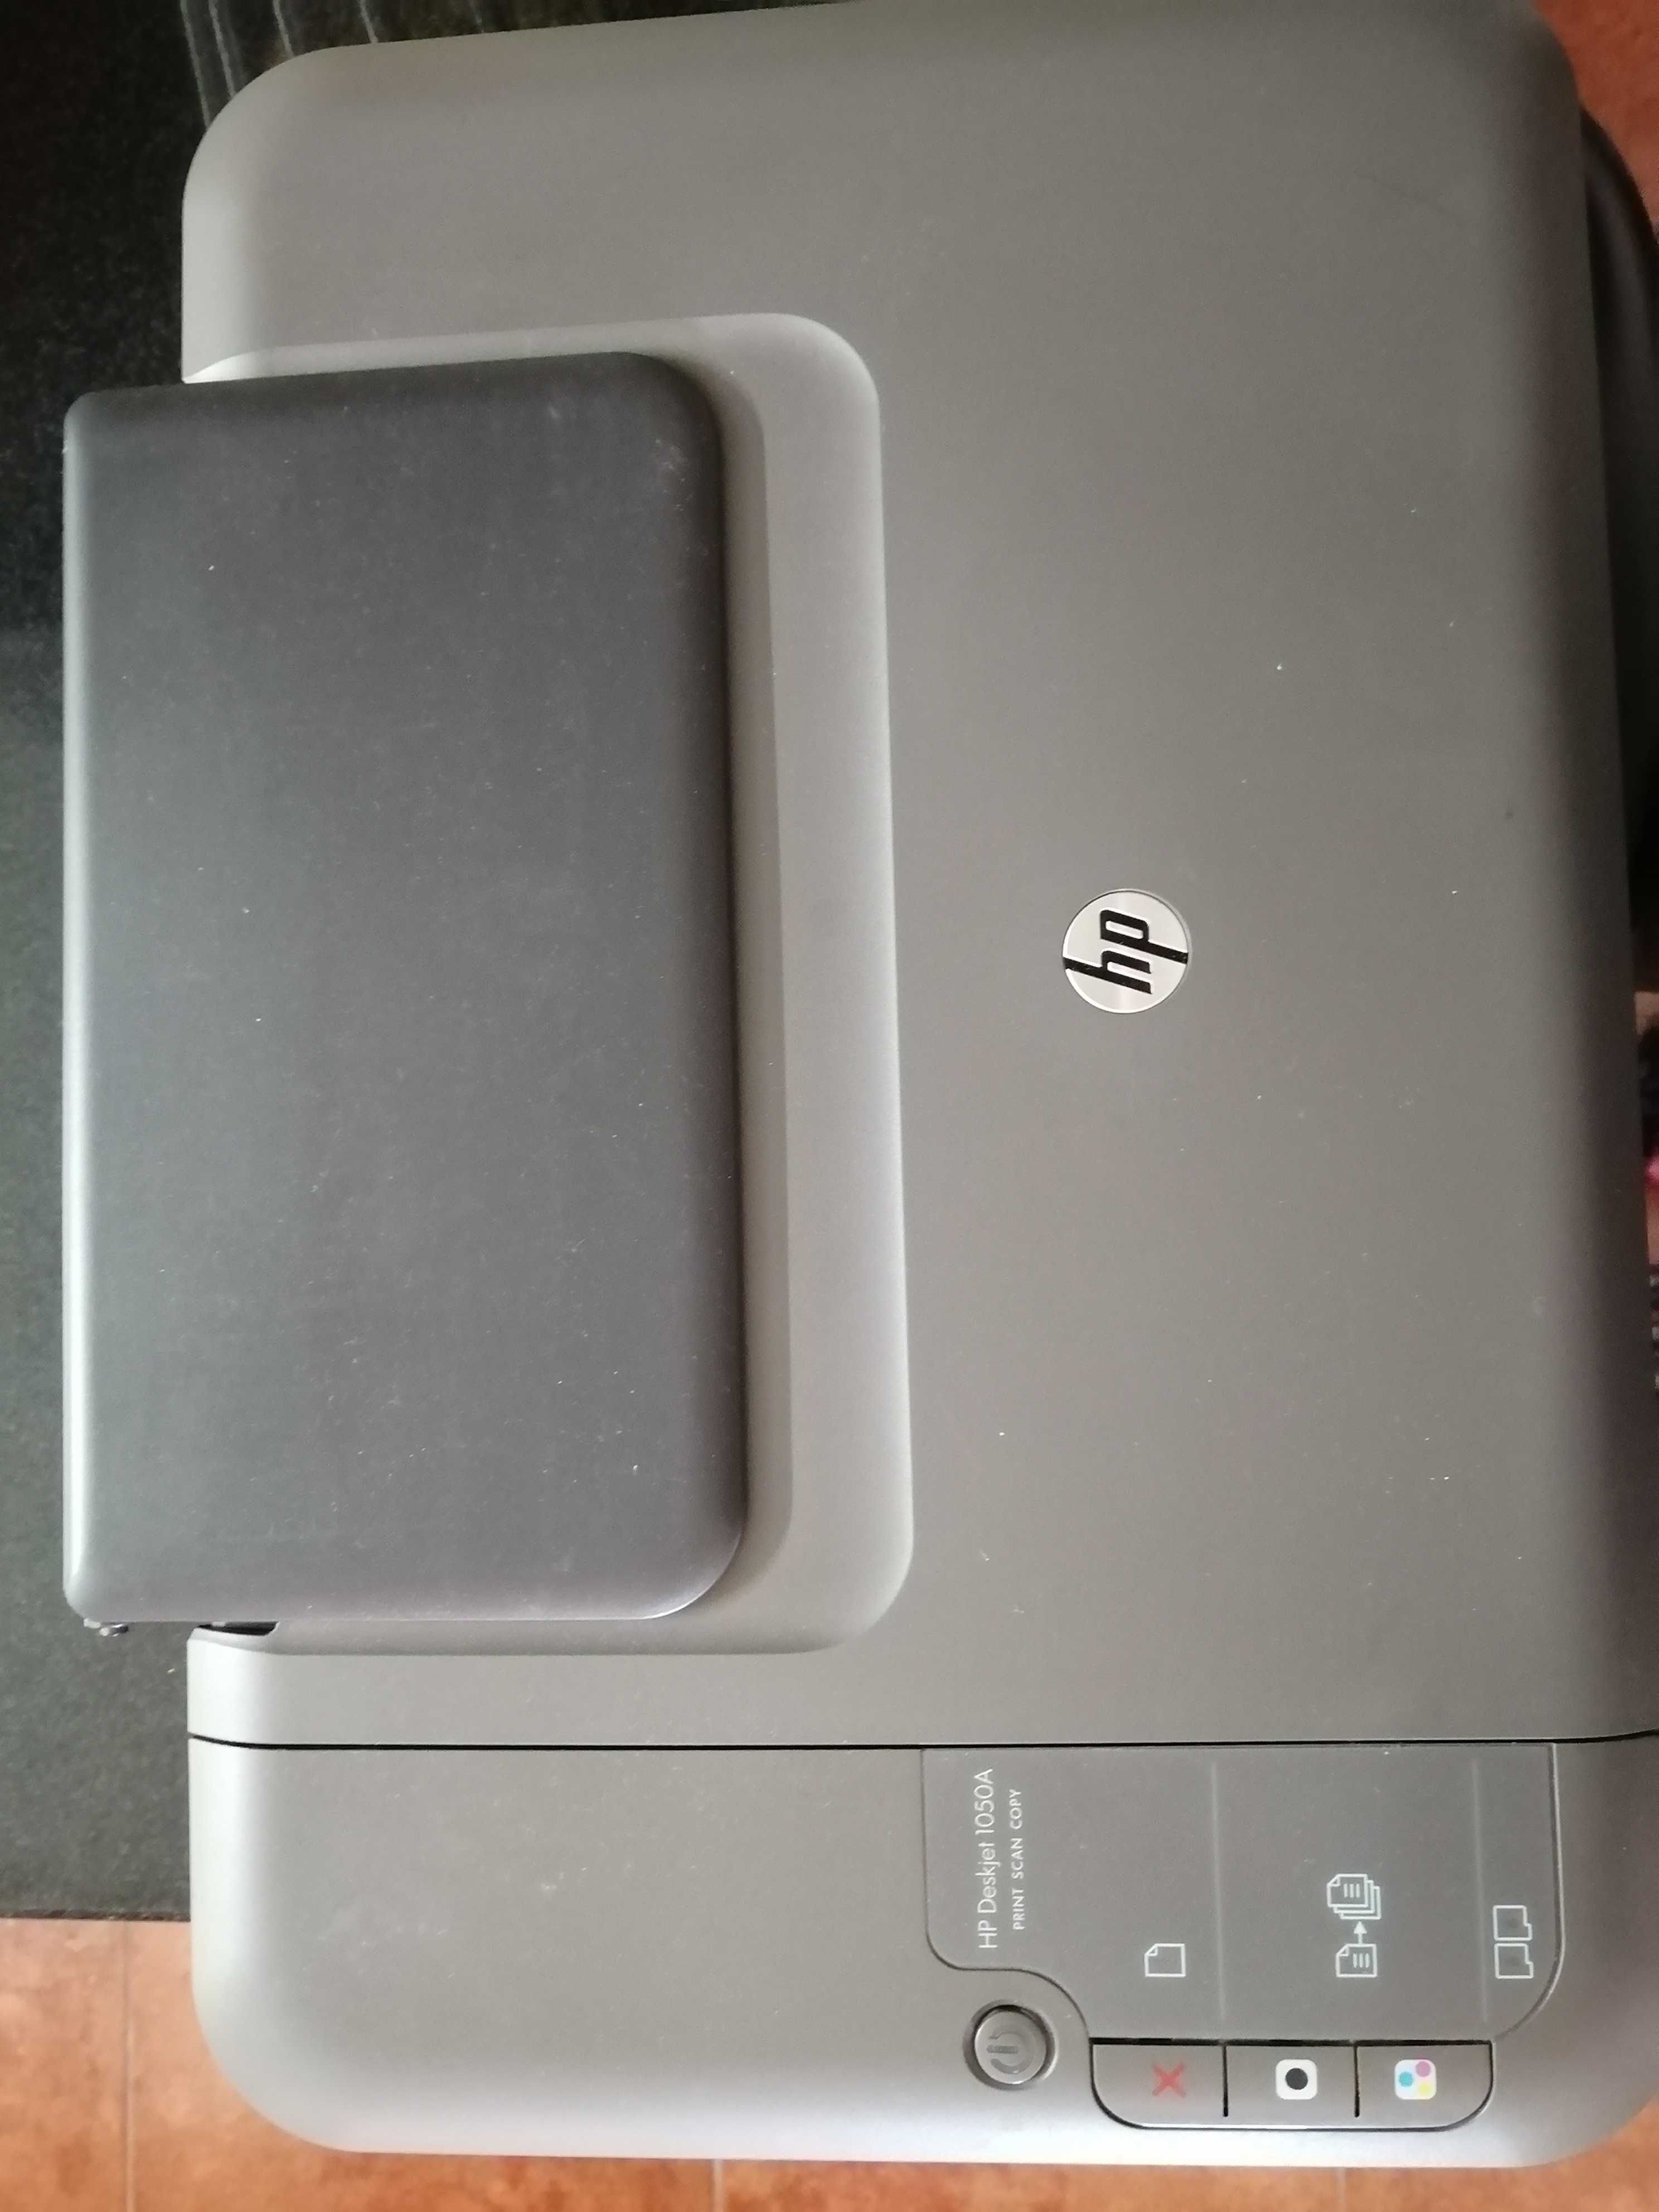 Peças impressora HP deskjet 1050A